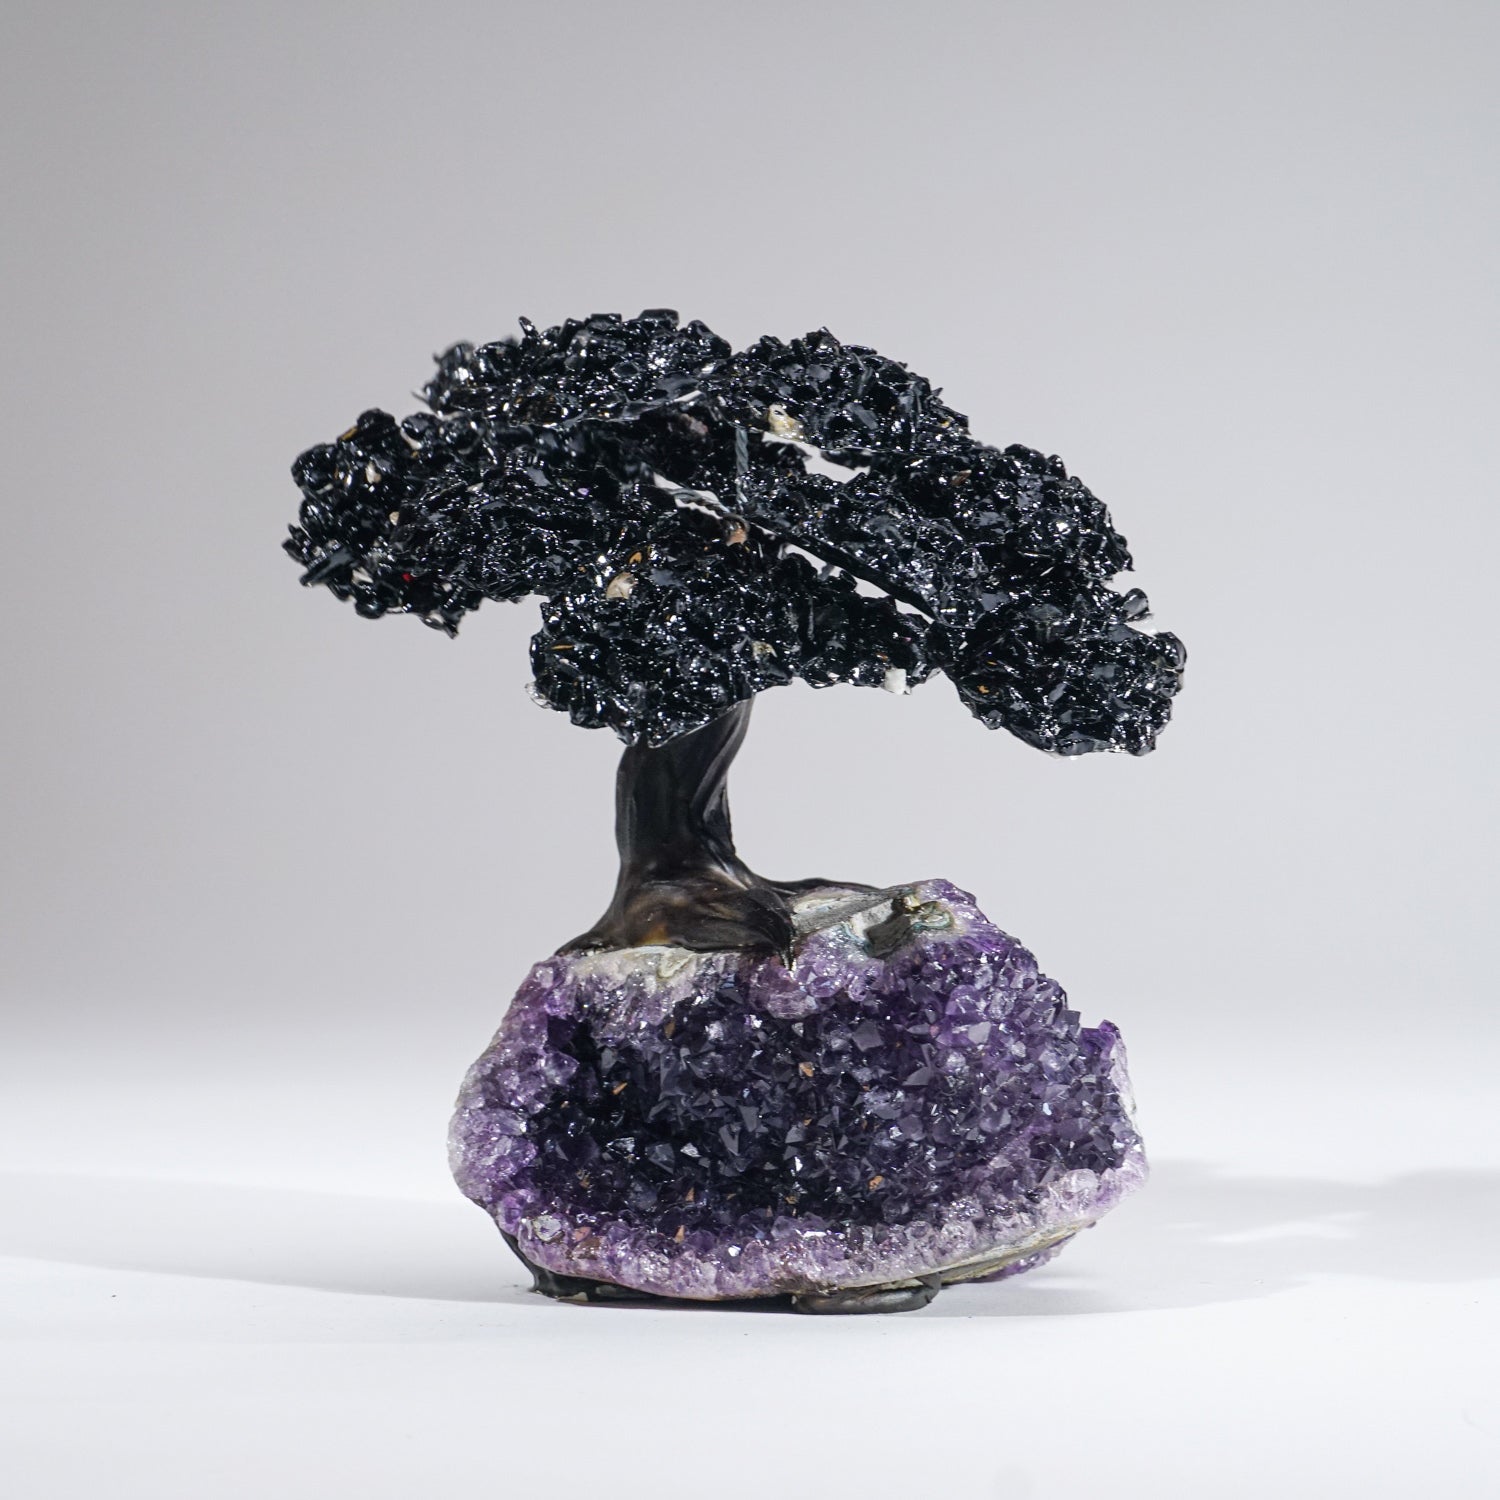 Large Black Tourmaline Clustered Gemstone Tree on Amethyst Matrix (The Cleansing Tree)